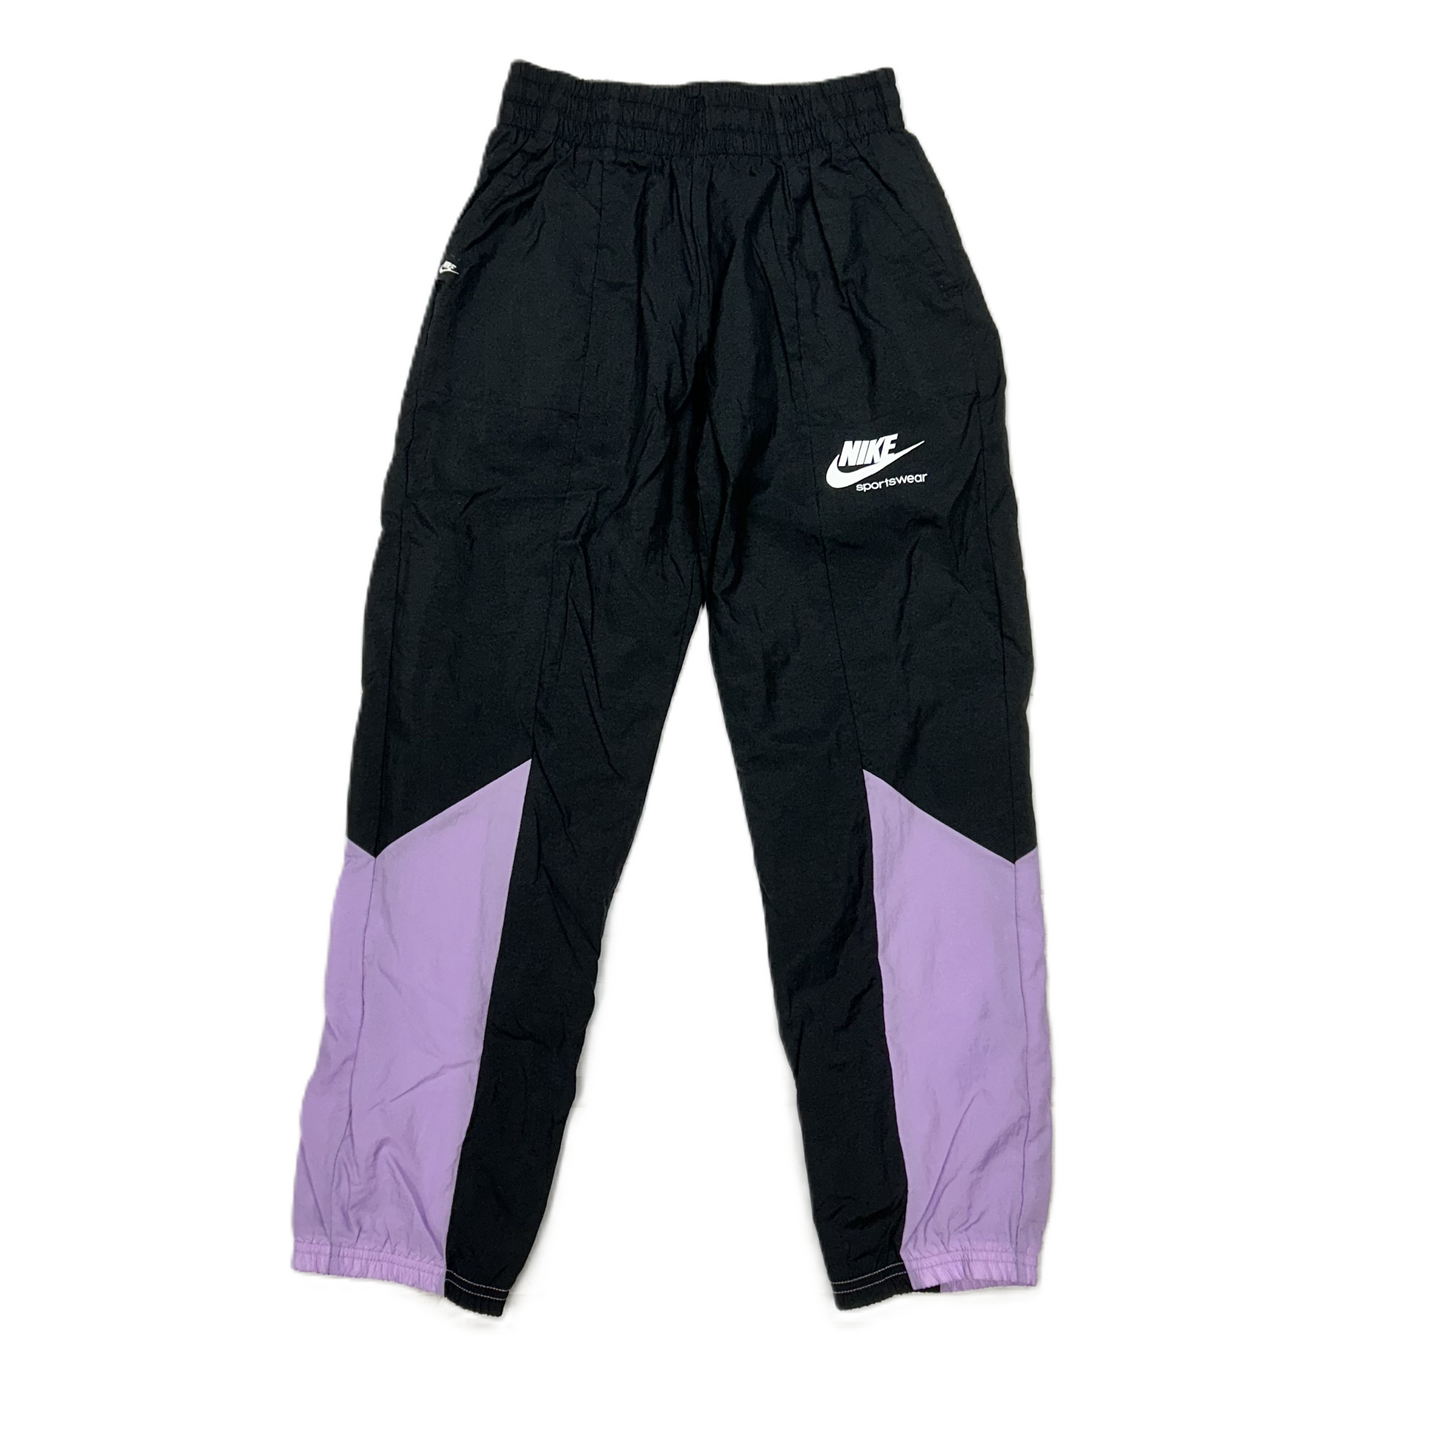 Black Athletic Pants By Nike Apparel, Size: L